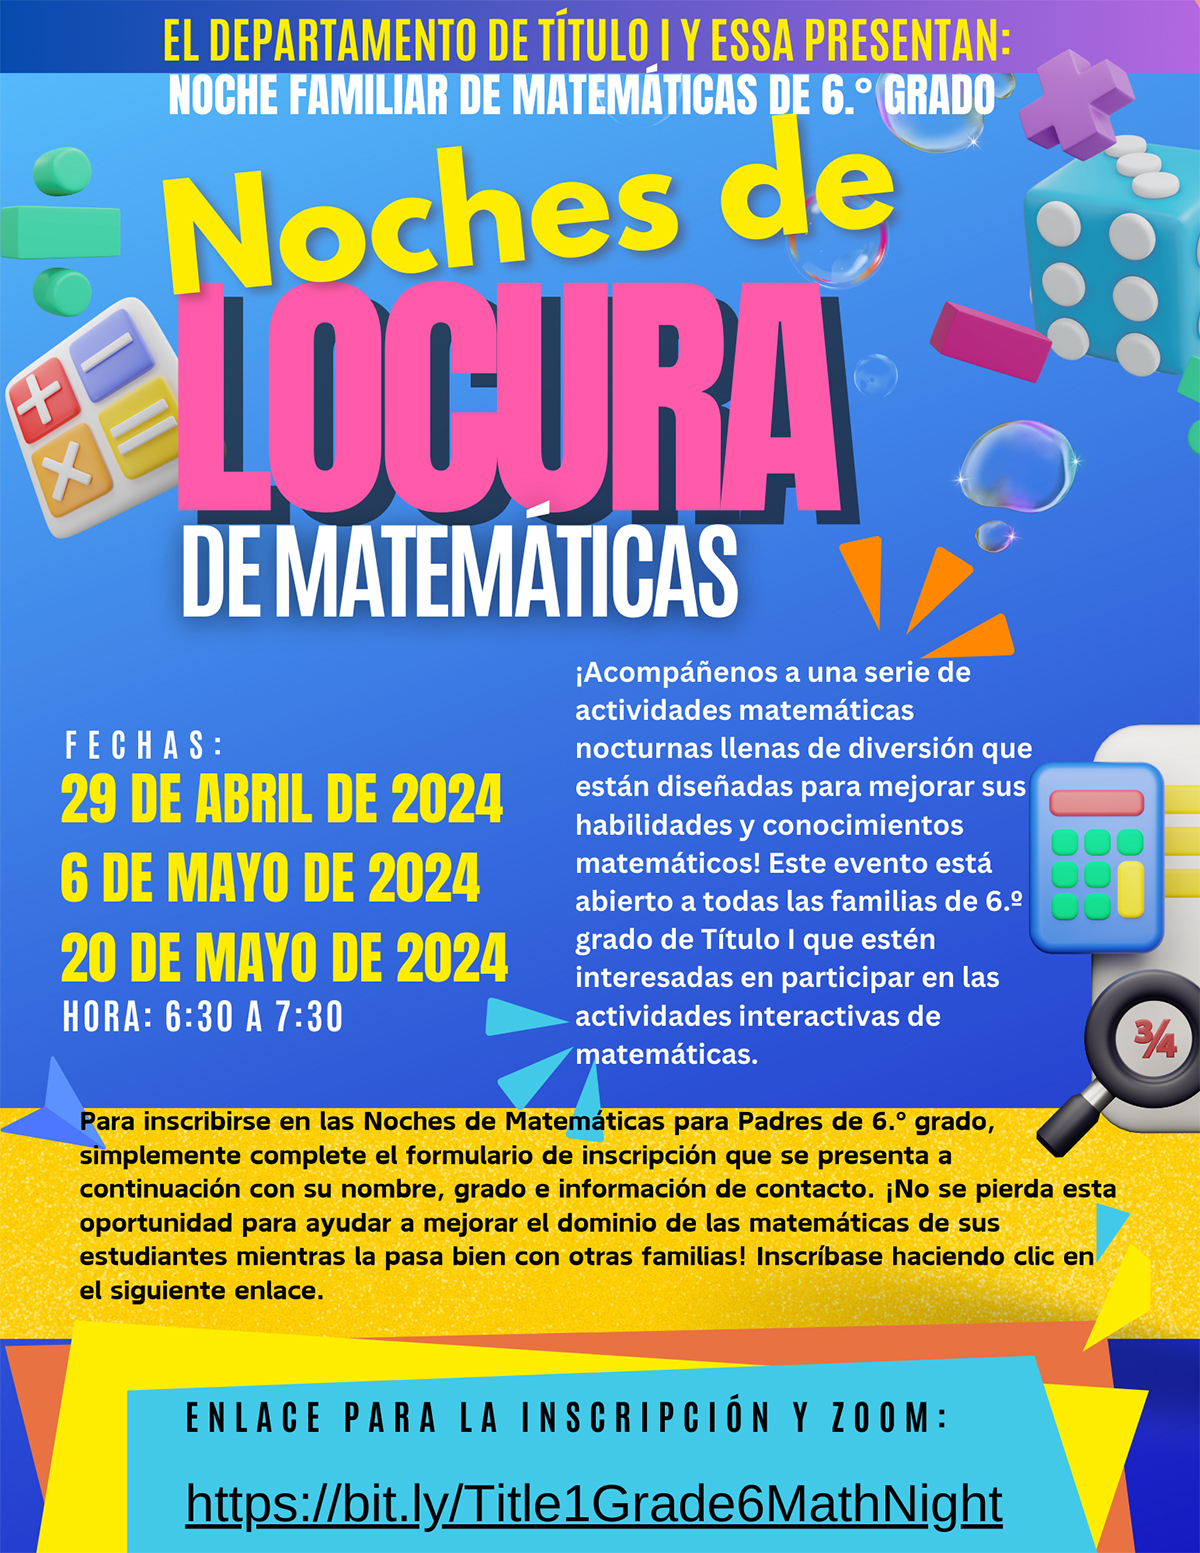 Math-Mania-Flyer-Spanish.jpg